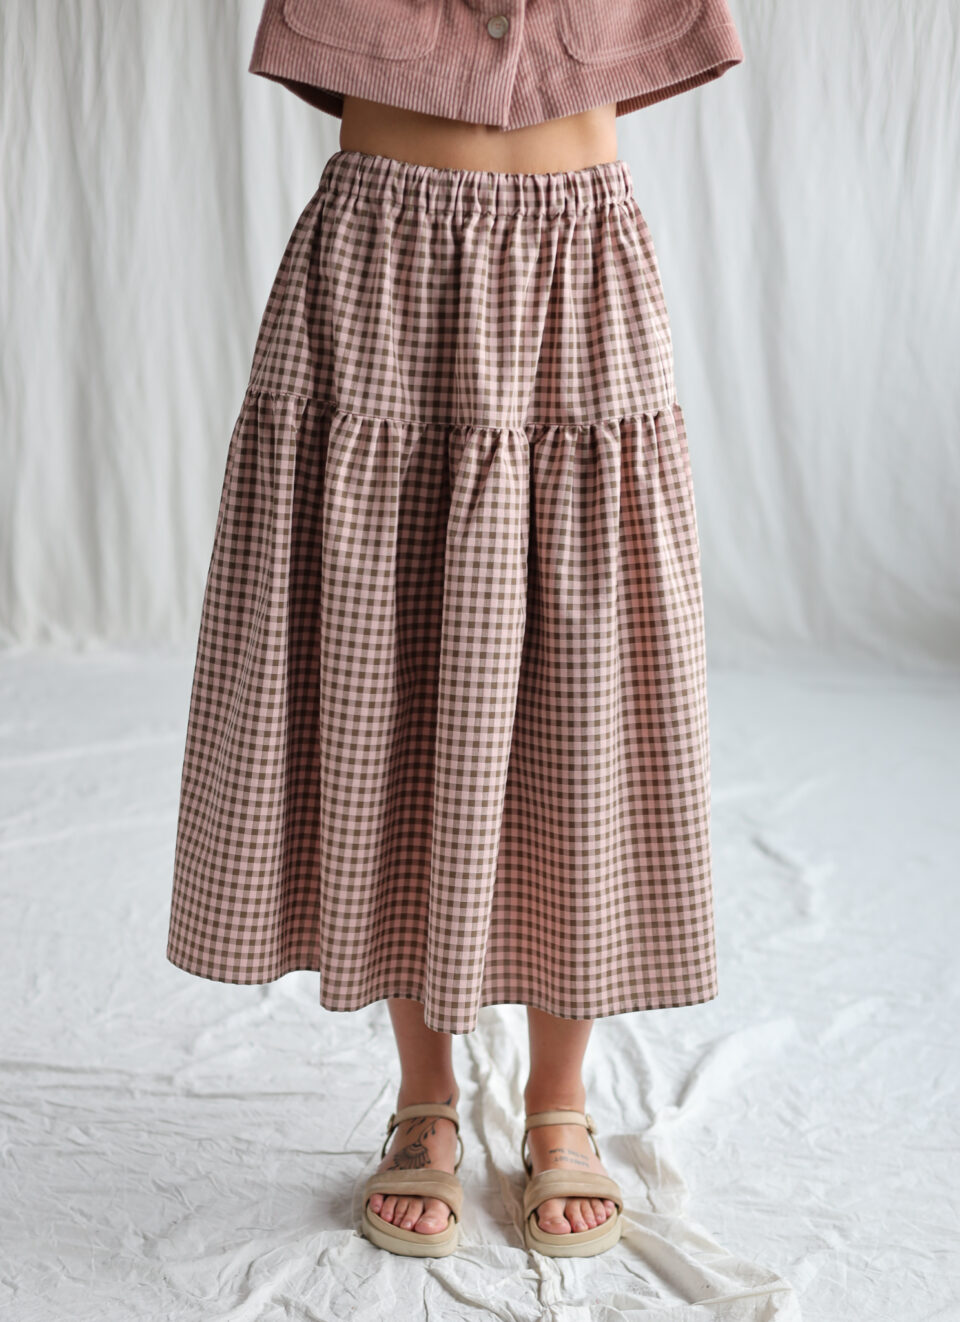 Gingham organic cotton elasticated waist skirt | Skirt | Sustainable clothing | OffOn clothing